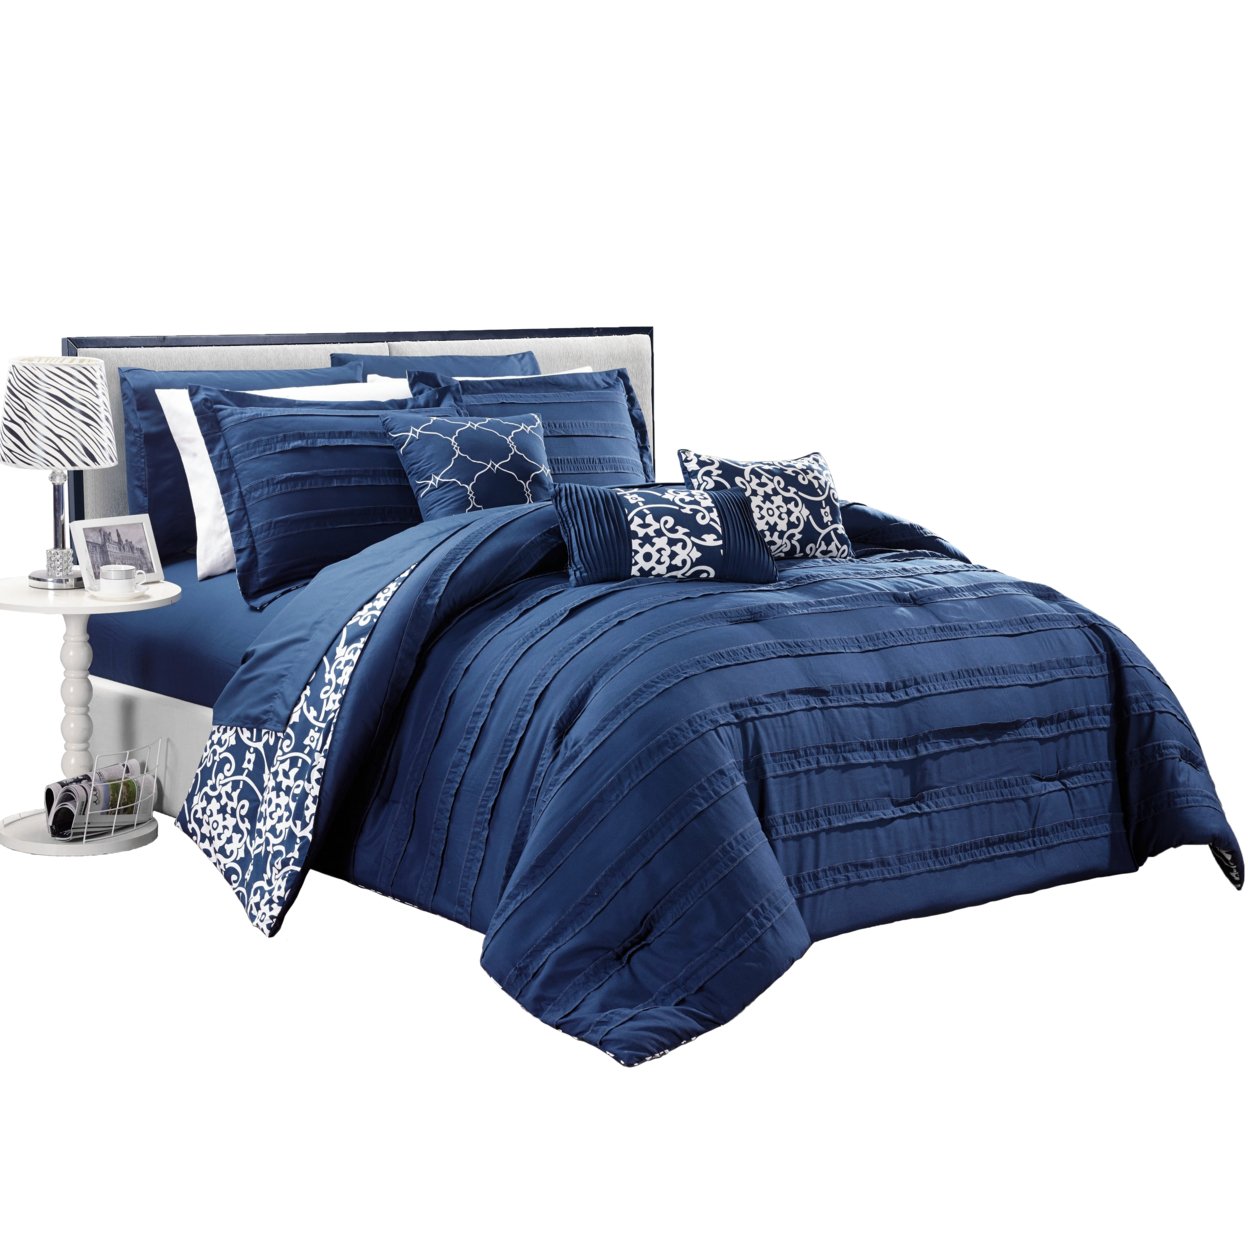 10-Piece Reversible Bed In A Bag Comforter & Sheet Set, Multiple Colors - Plum, King